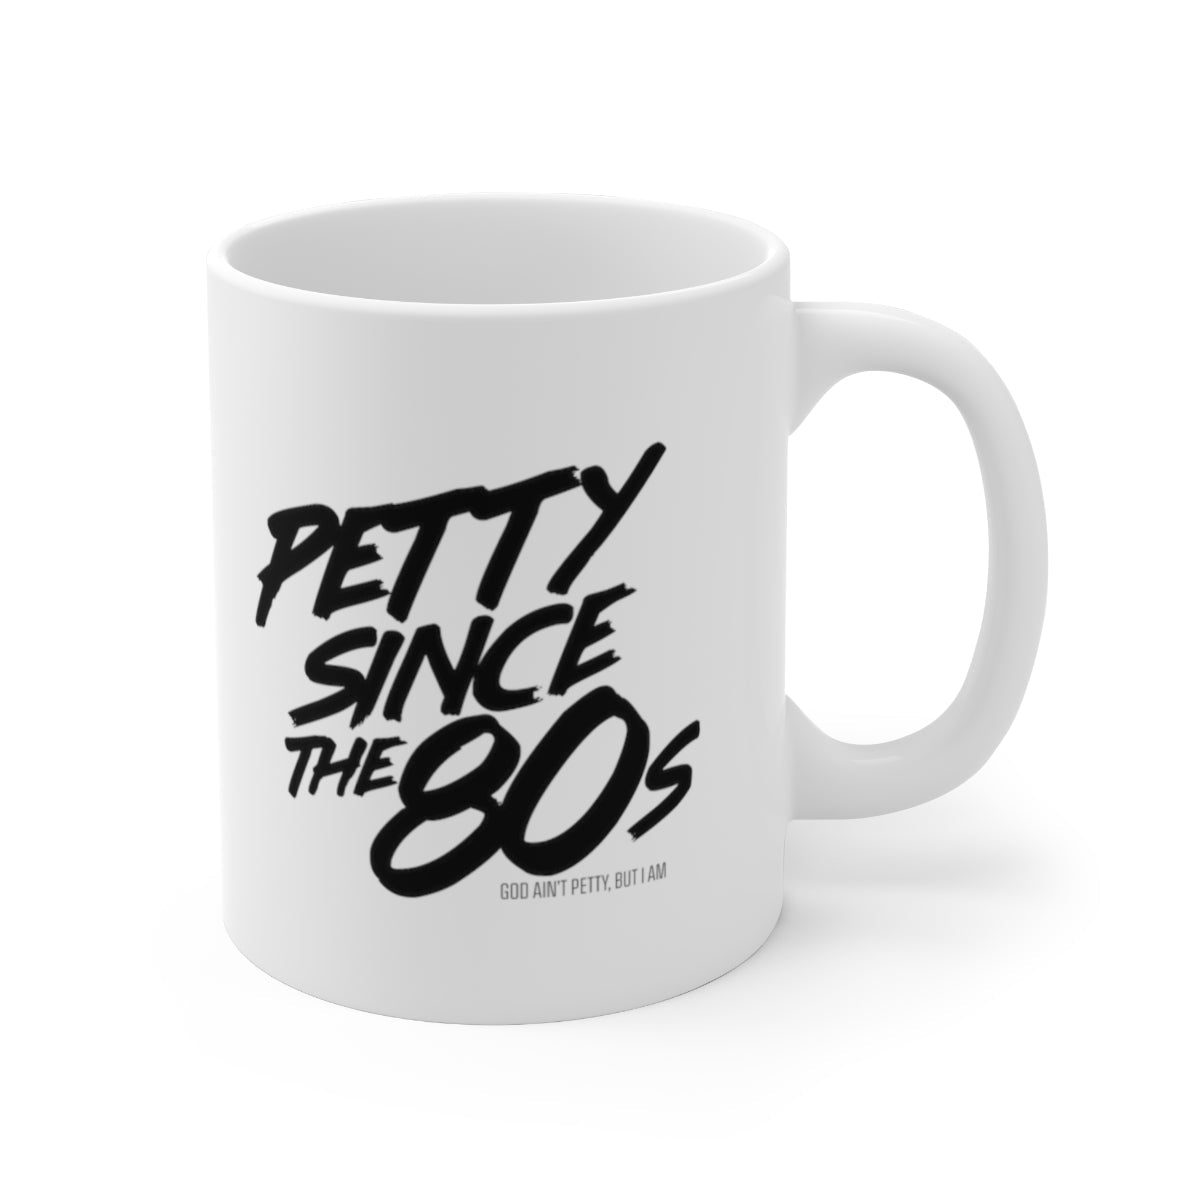 Petty Since the 80s Mug 11oz (White/Black)-Mug-The Original God Ain't Petty But I Am